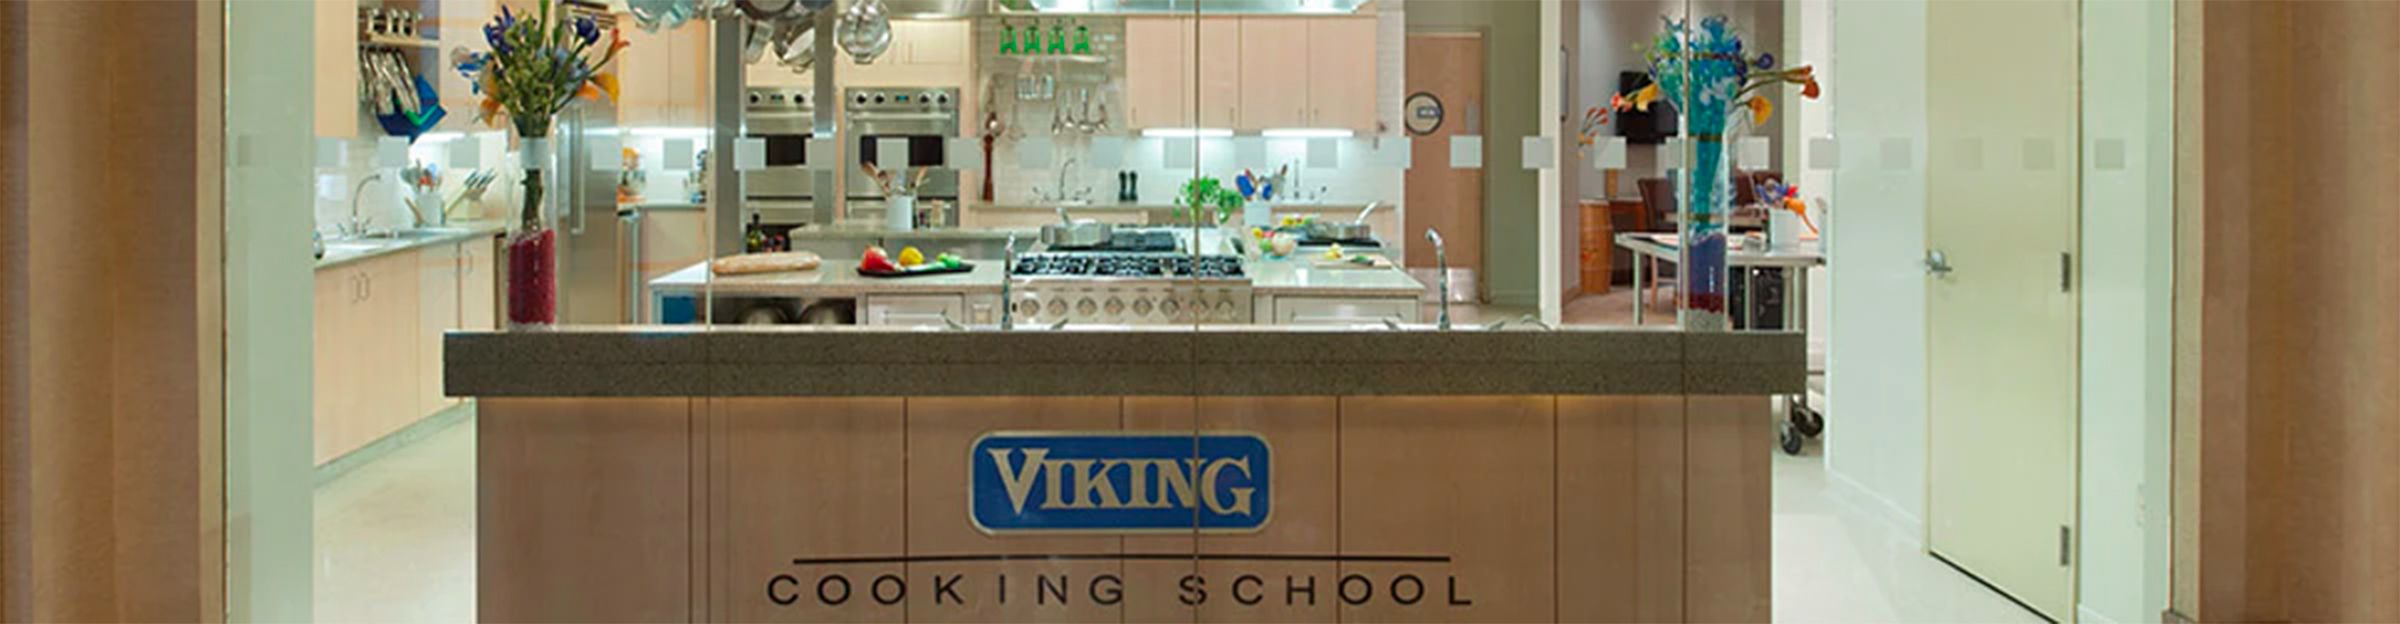 Viking Cooking School Atlantic City Viking Range, LLC